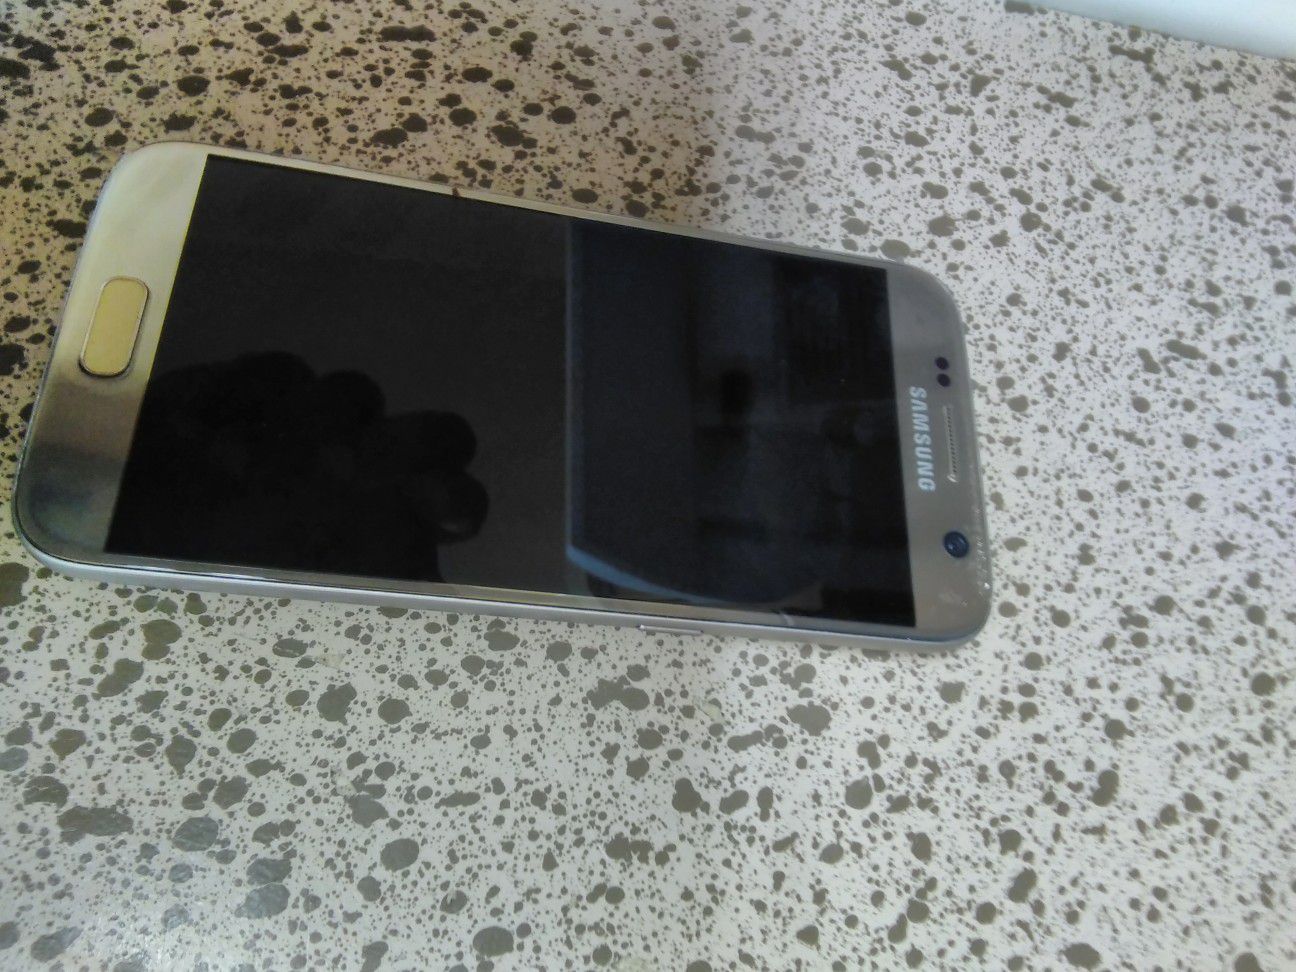 Samsung S7 edge on Verizon, excellent condition